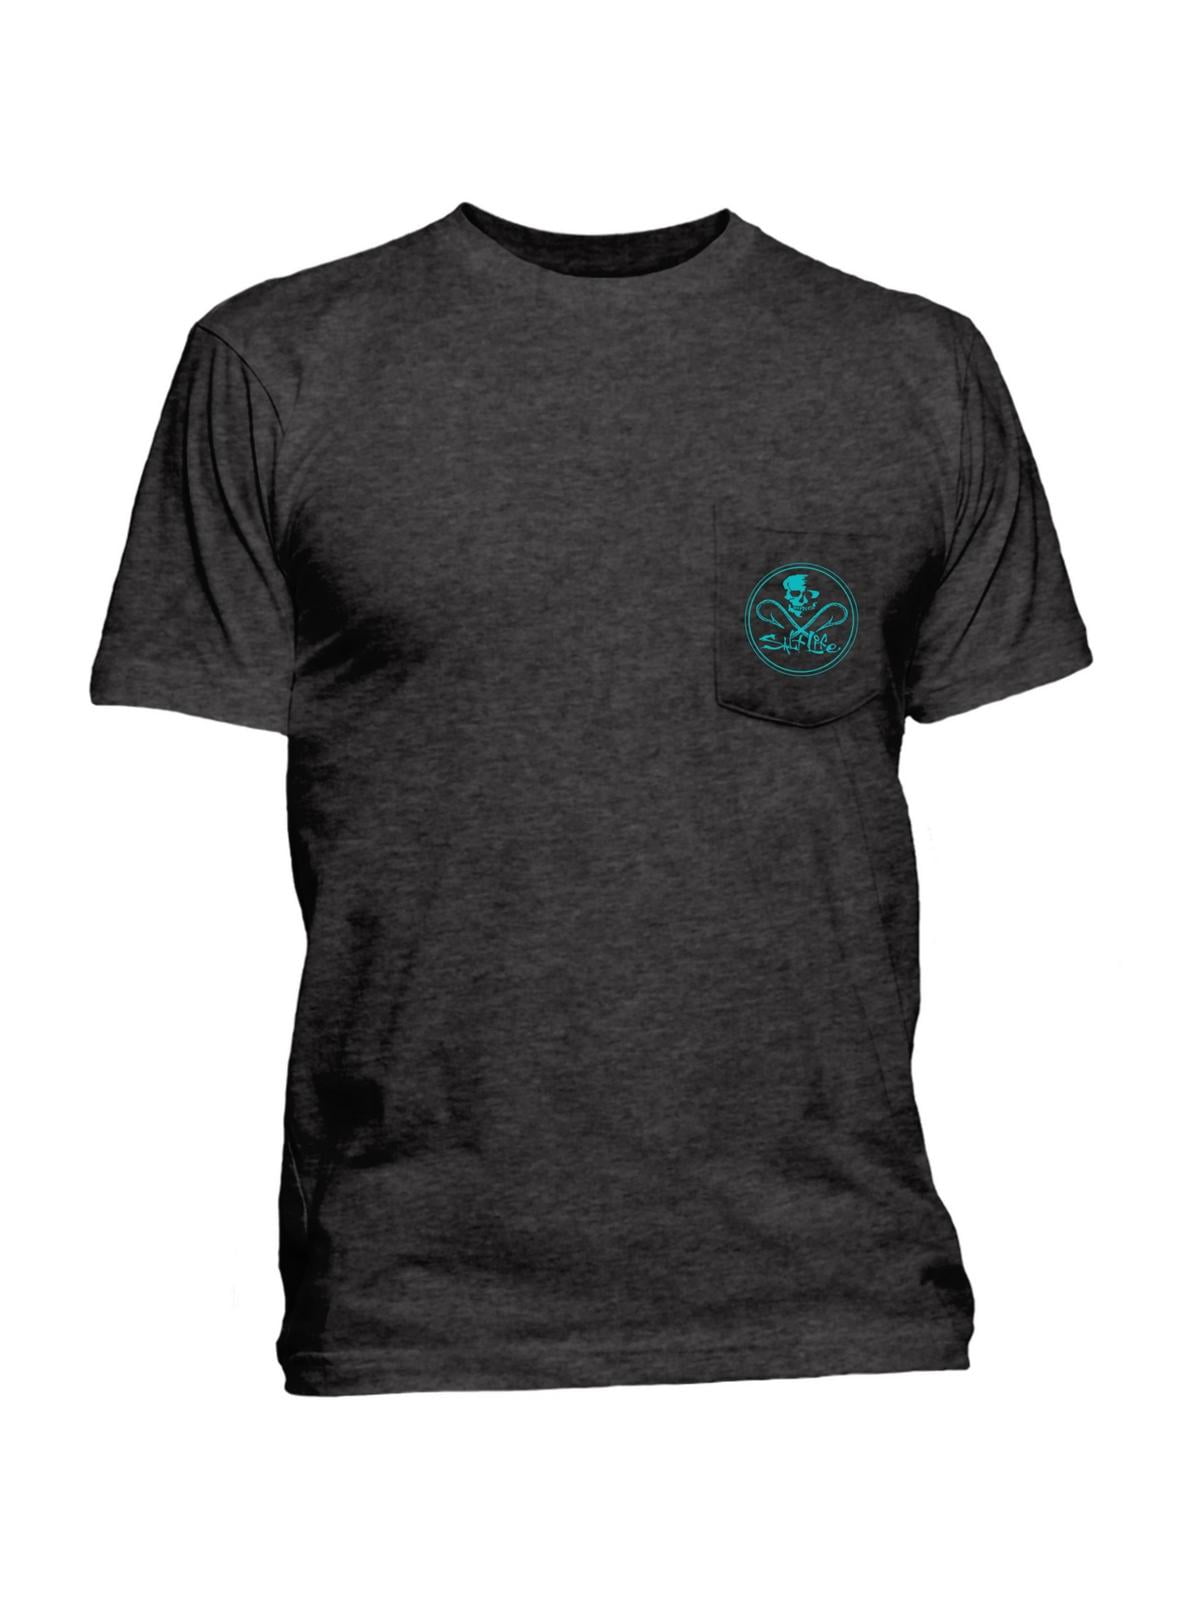 Salt Life Mens Skull and Hook Logo Crewneck Graphic T-Shirt